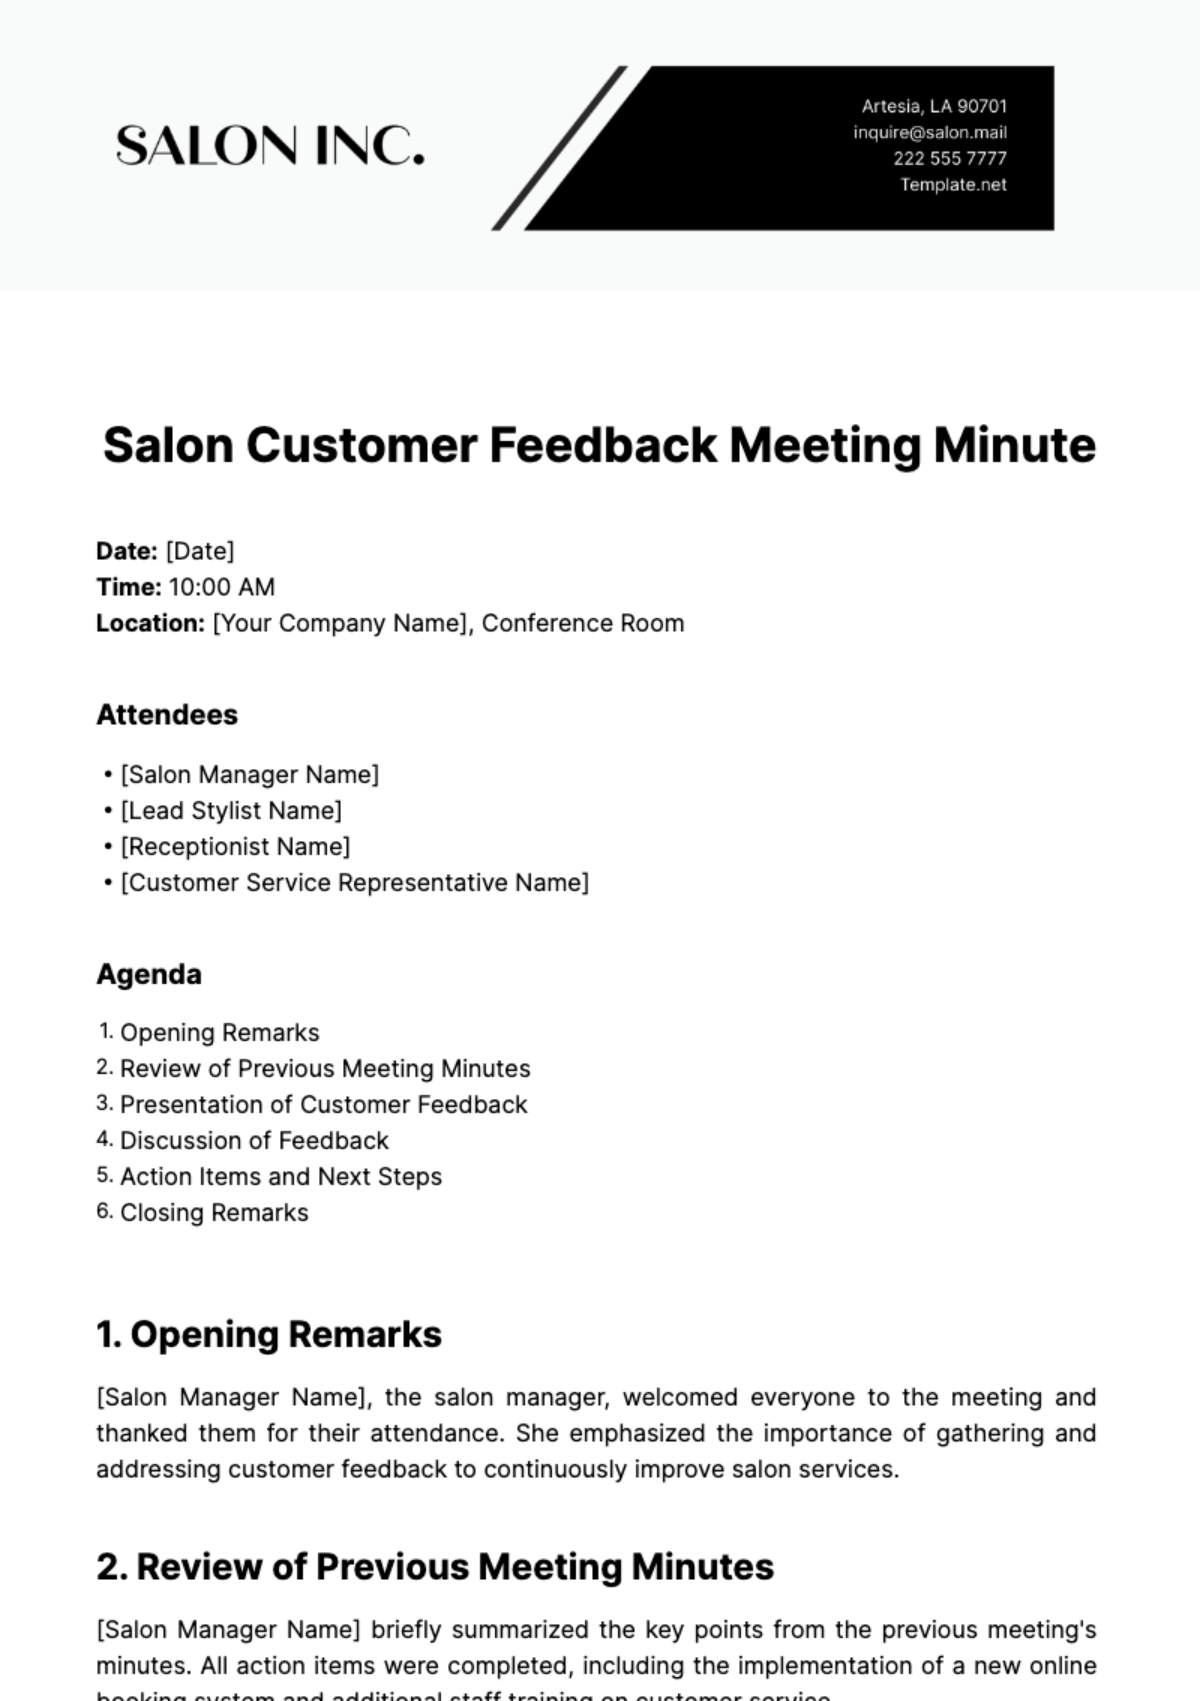 Free Salon Customer Feedback Meeting Minute Template